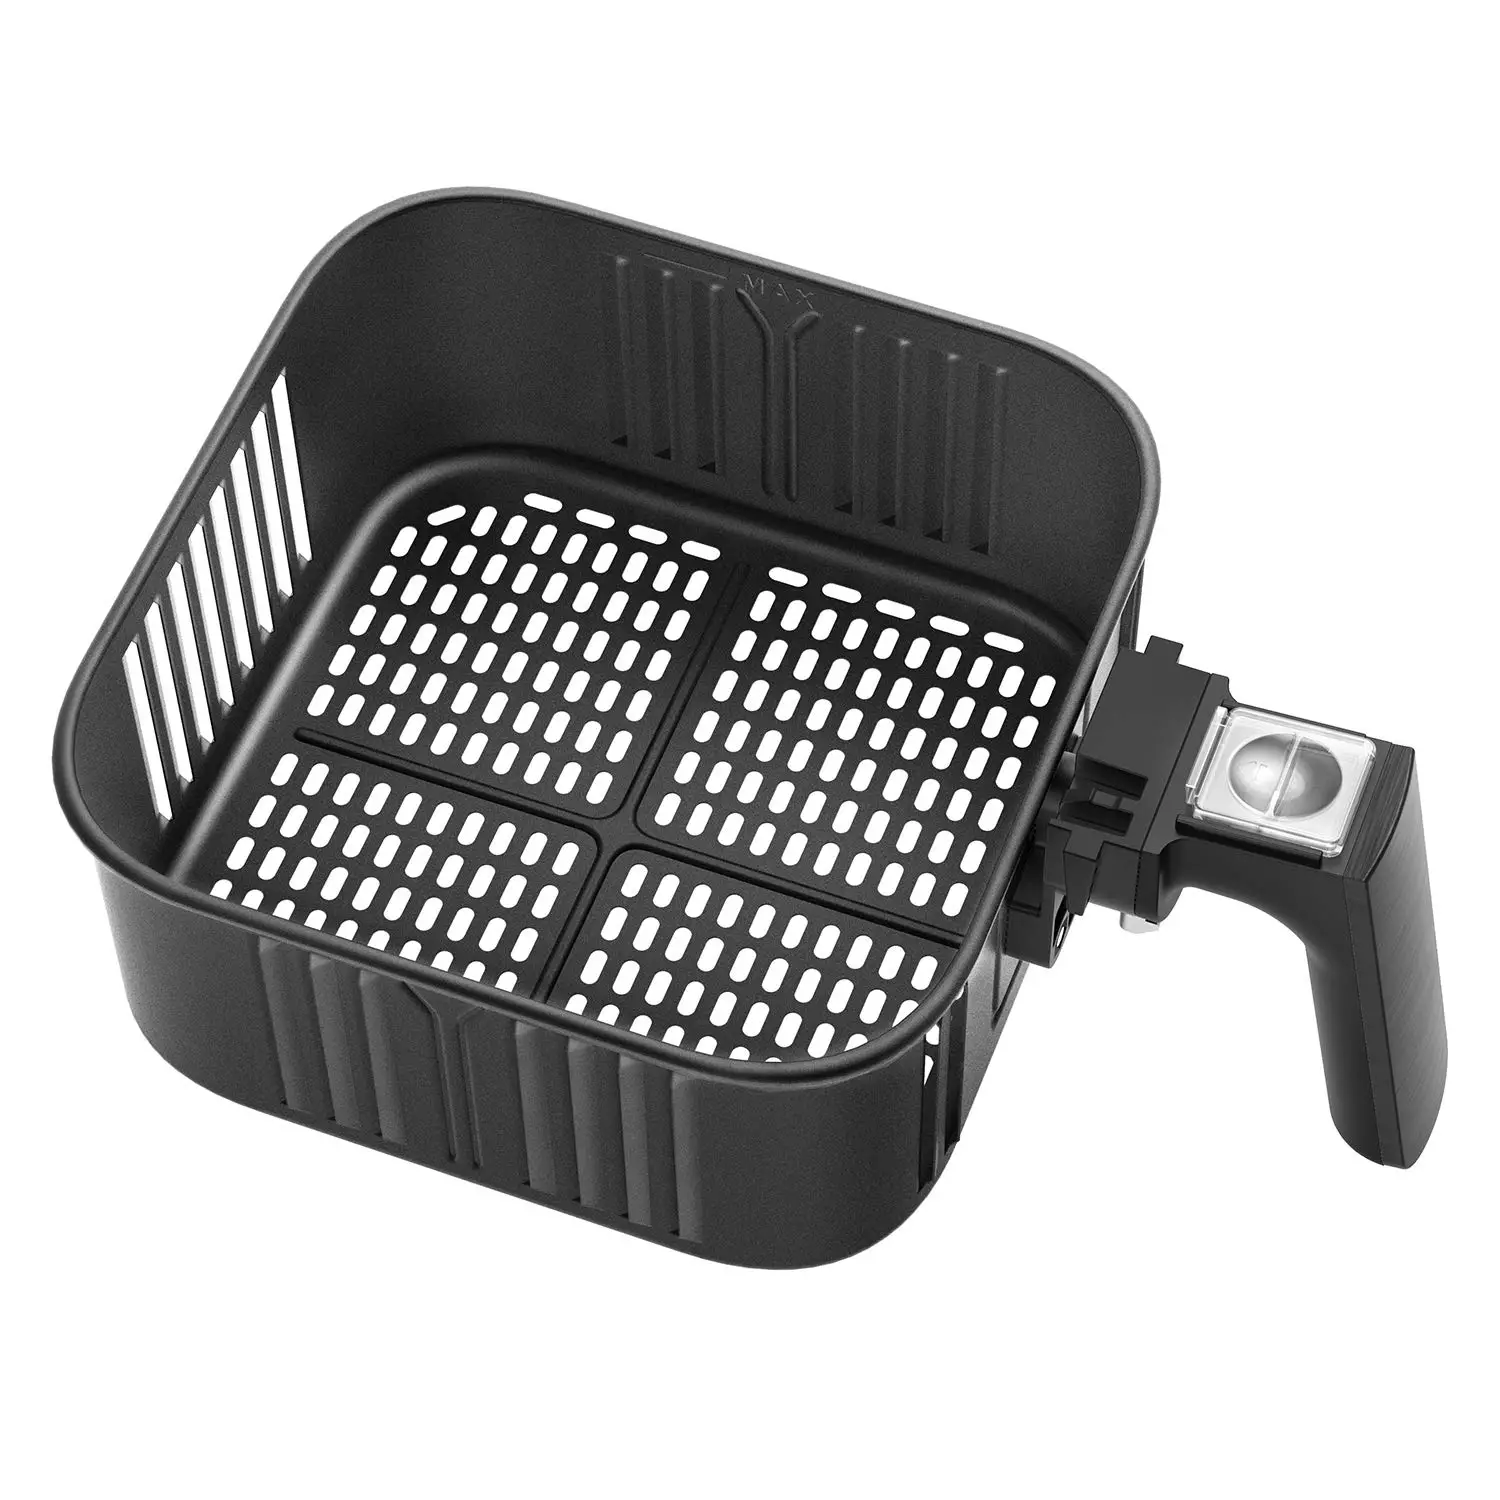 Best Replacement Basket For Farberware Xl Air Fryer